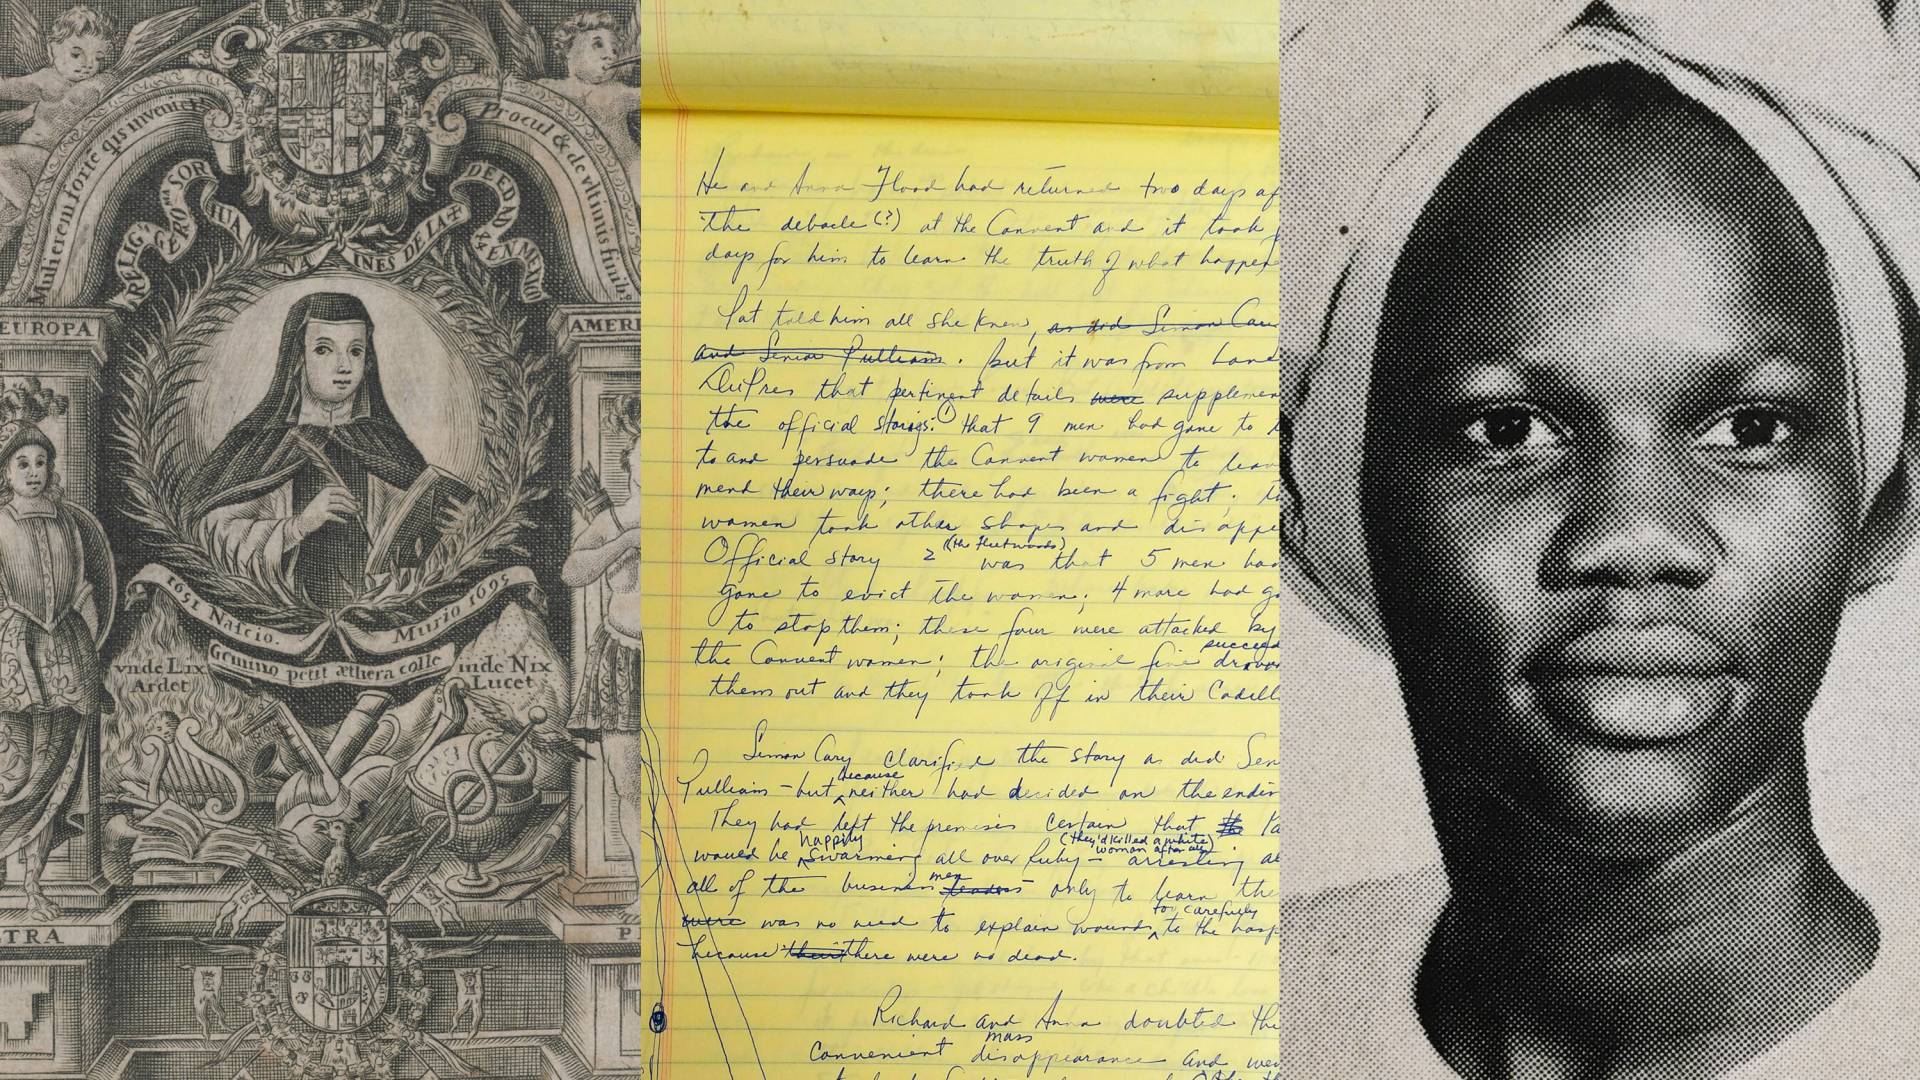 Sor Ines book illustration, Toni Morrison handwritten notes, portrait of a woman wearing a turban